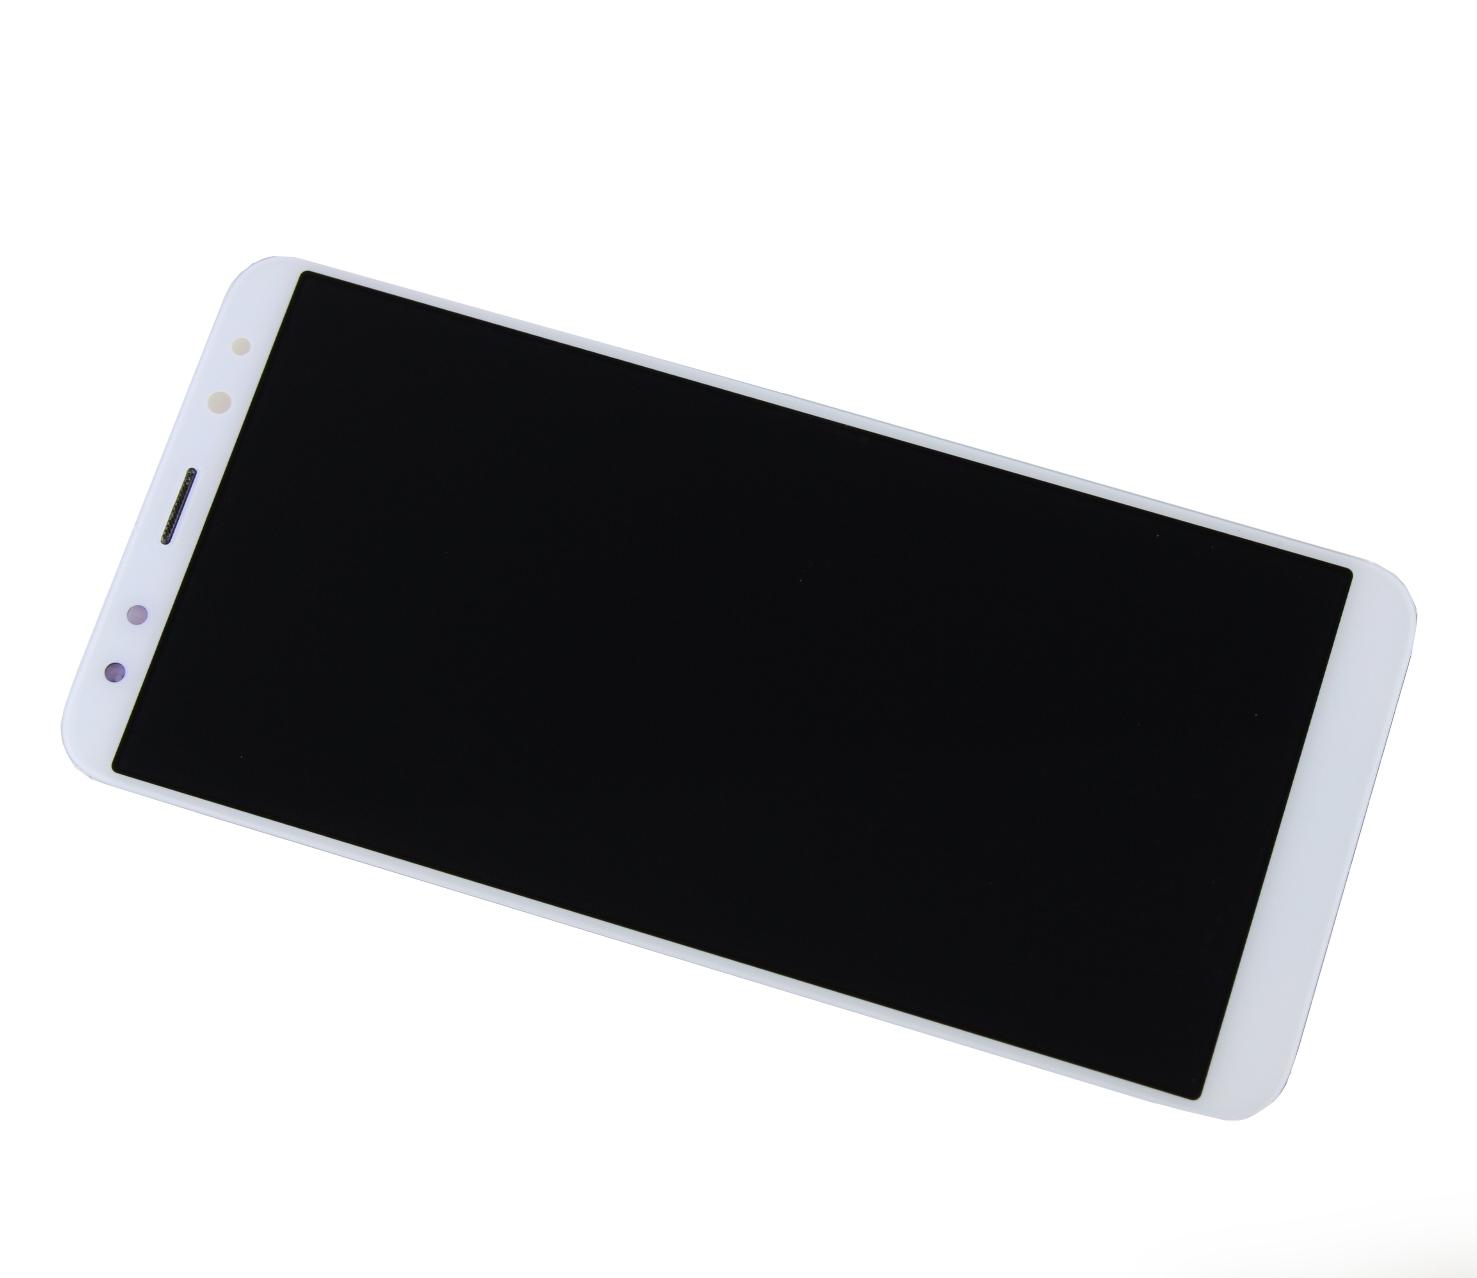 Originál LCD + Dotyková vrstva Huawei Mate 10 Lite RNE-L01 bílá repasovaný díl - vyměněné sklíčko s rámečkem